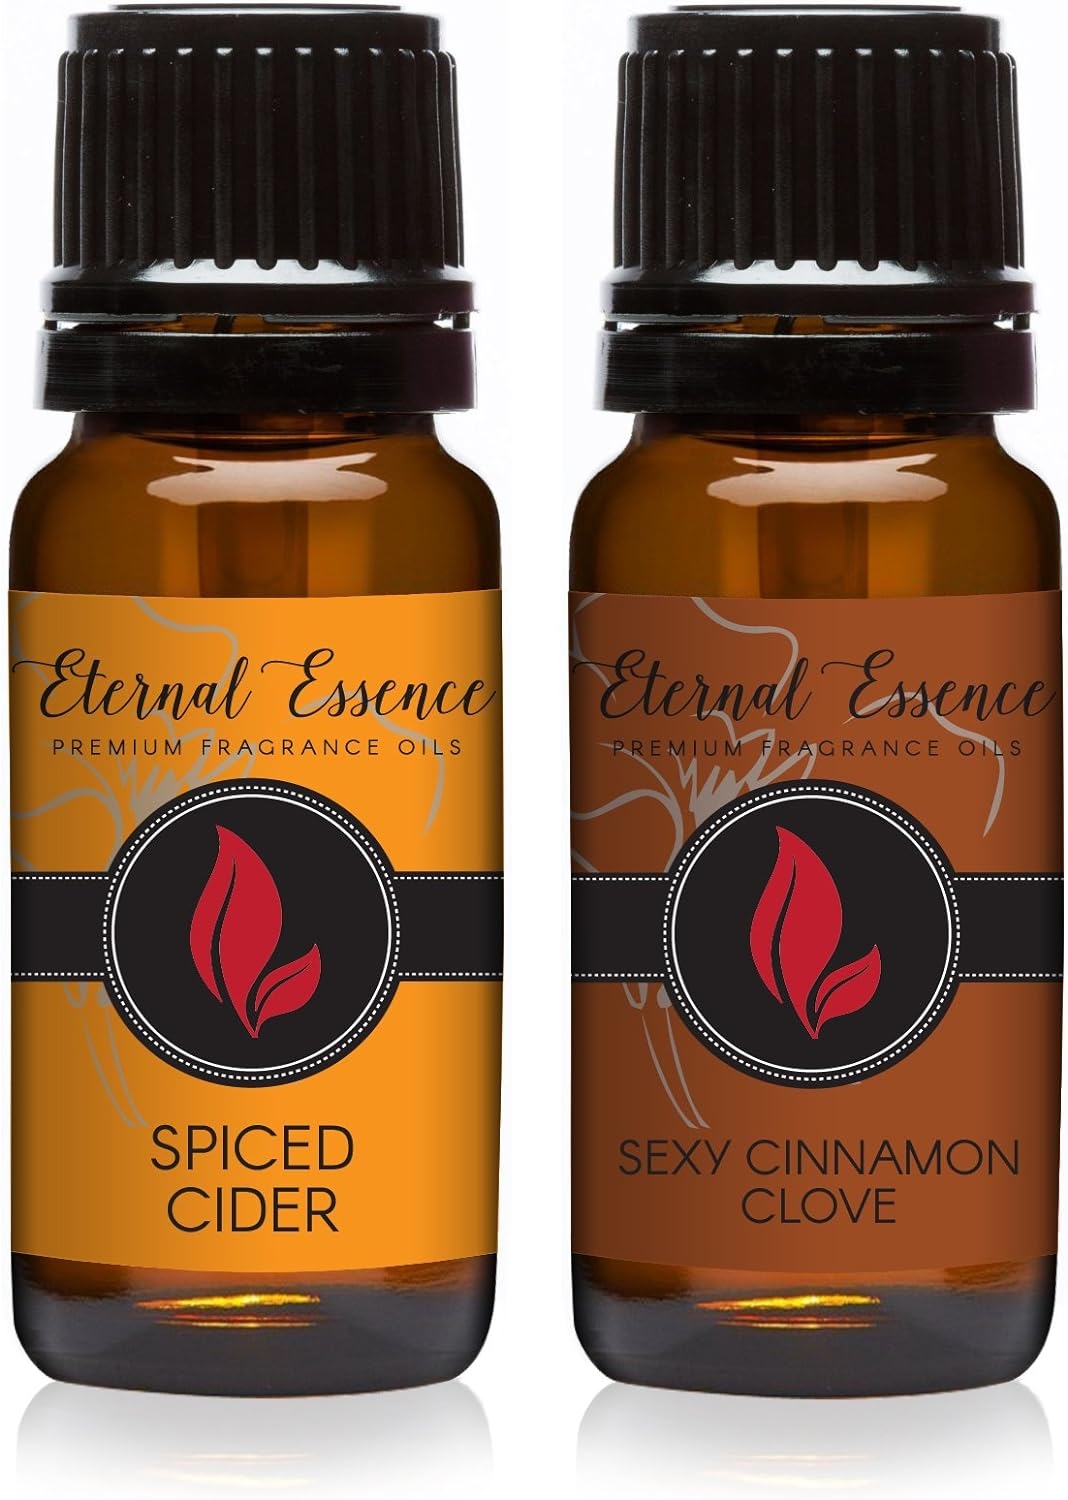 Spiced Cider & Sexy Cinnamon Clove